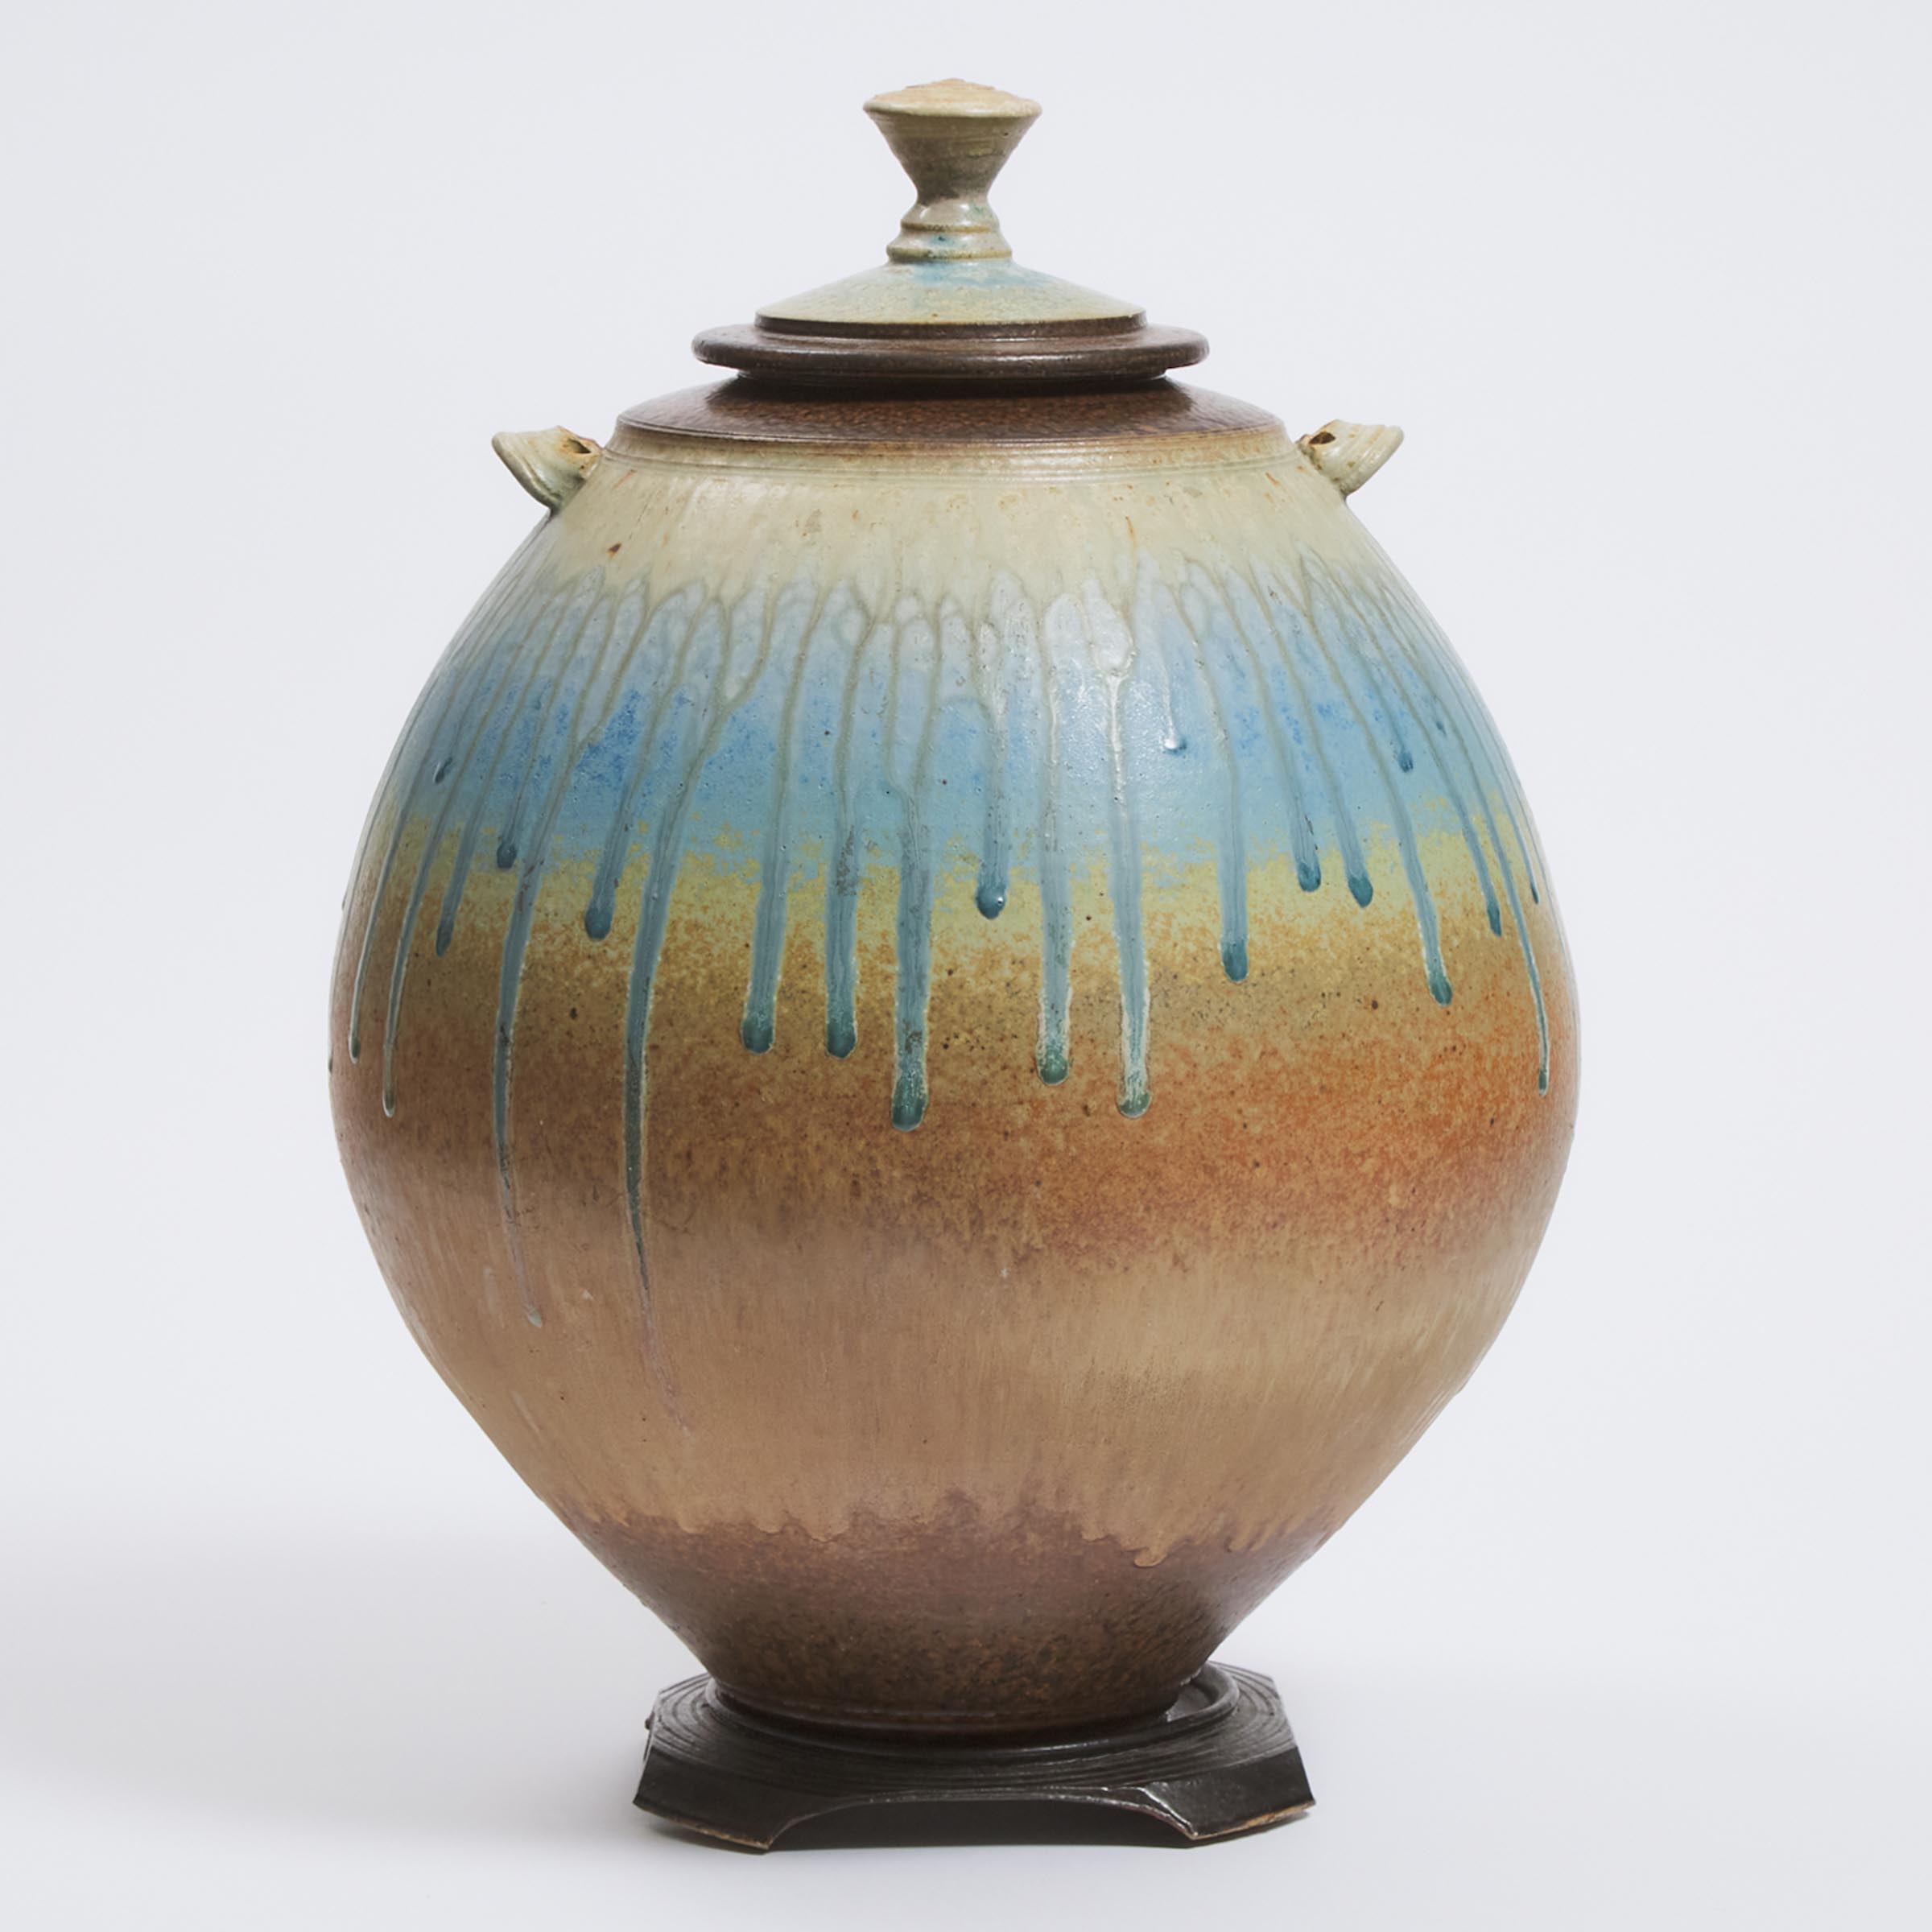 Richard Aerni (American, b.1952), Large Covered Stoneware Jar, c.1990